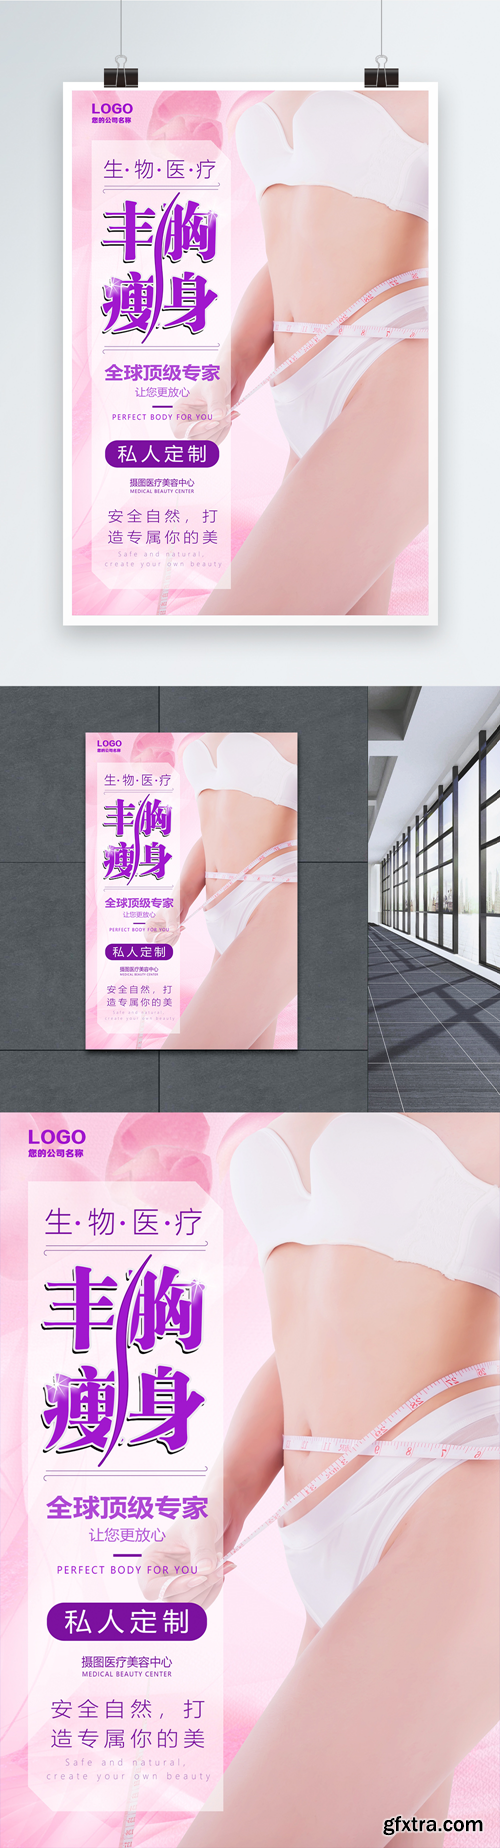 breast enhancement medical beauty poster design